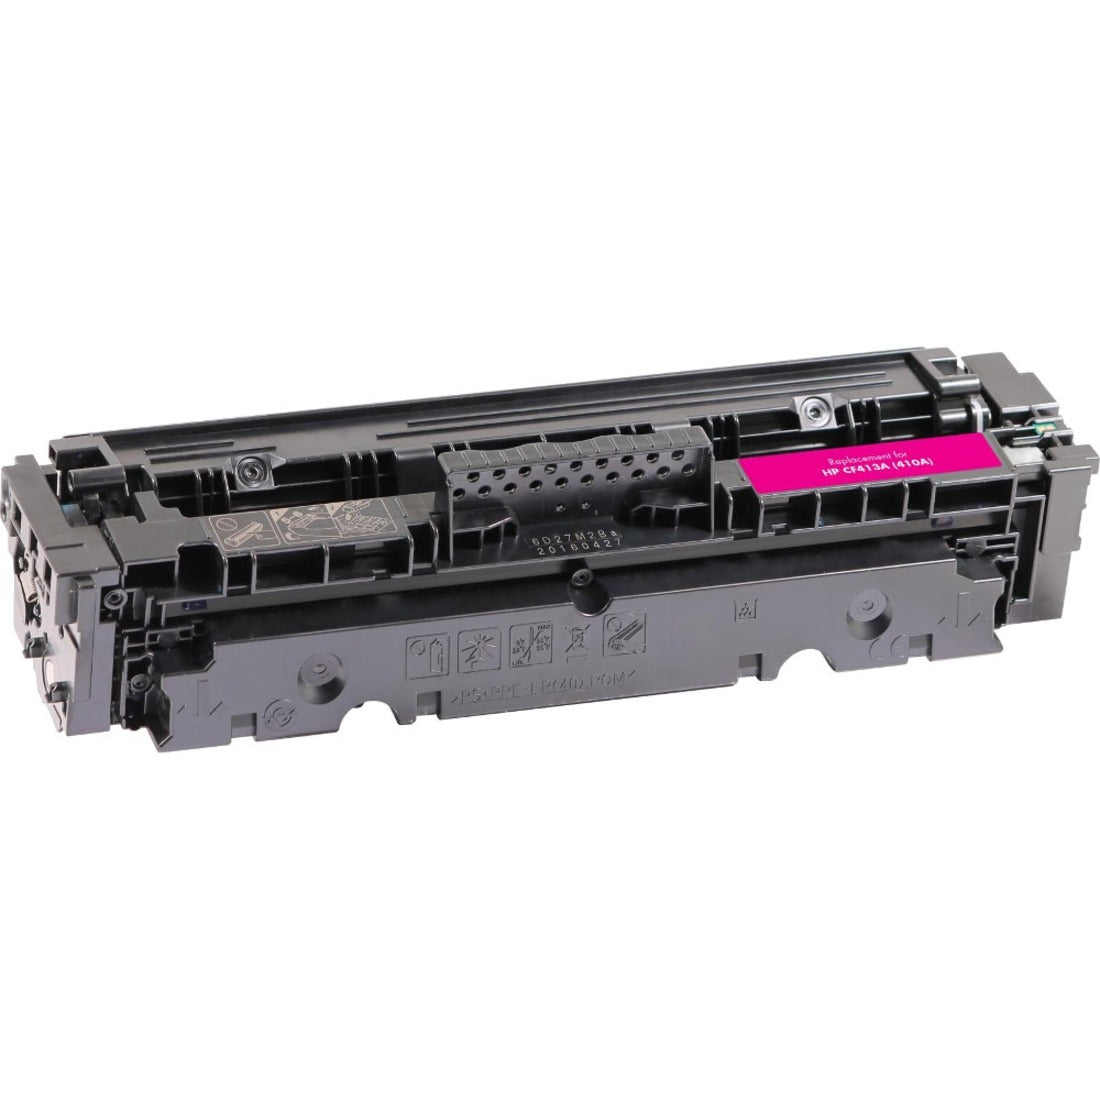 Clover Technologies 200947P Toner Cartridge, Magenta, Compatible with HP Color LaserJet Pro Printers